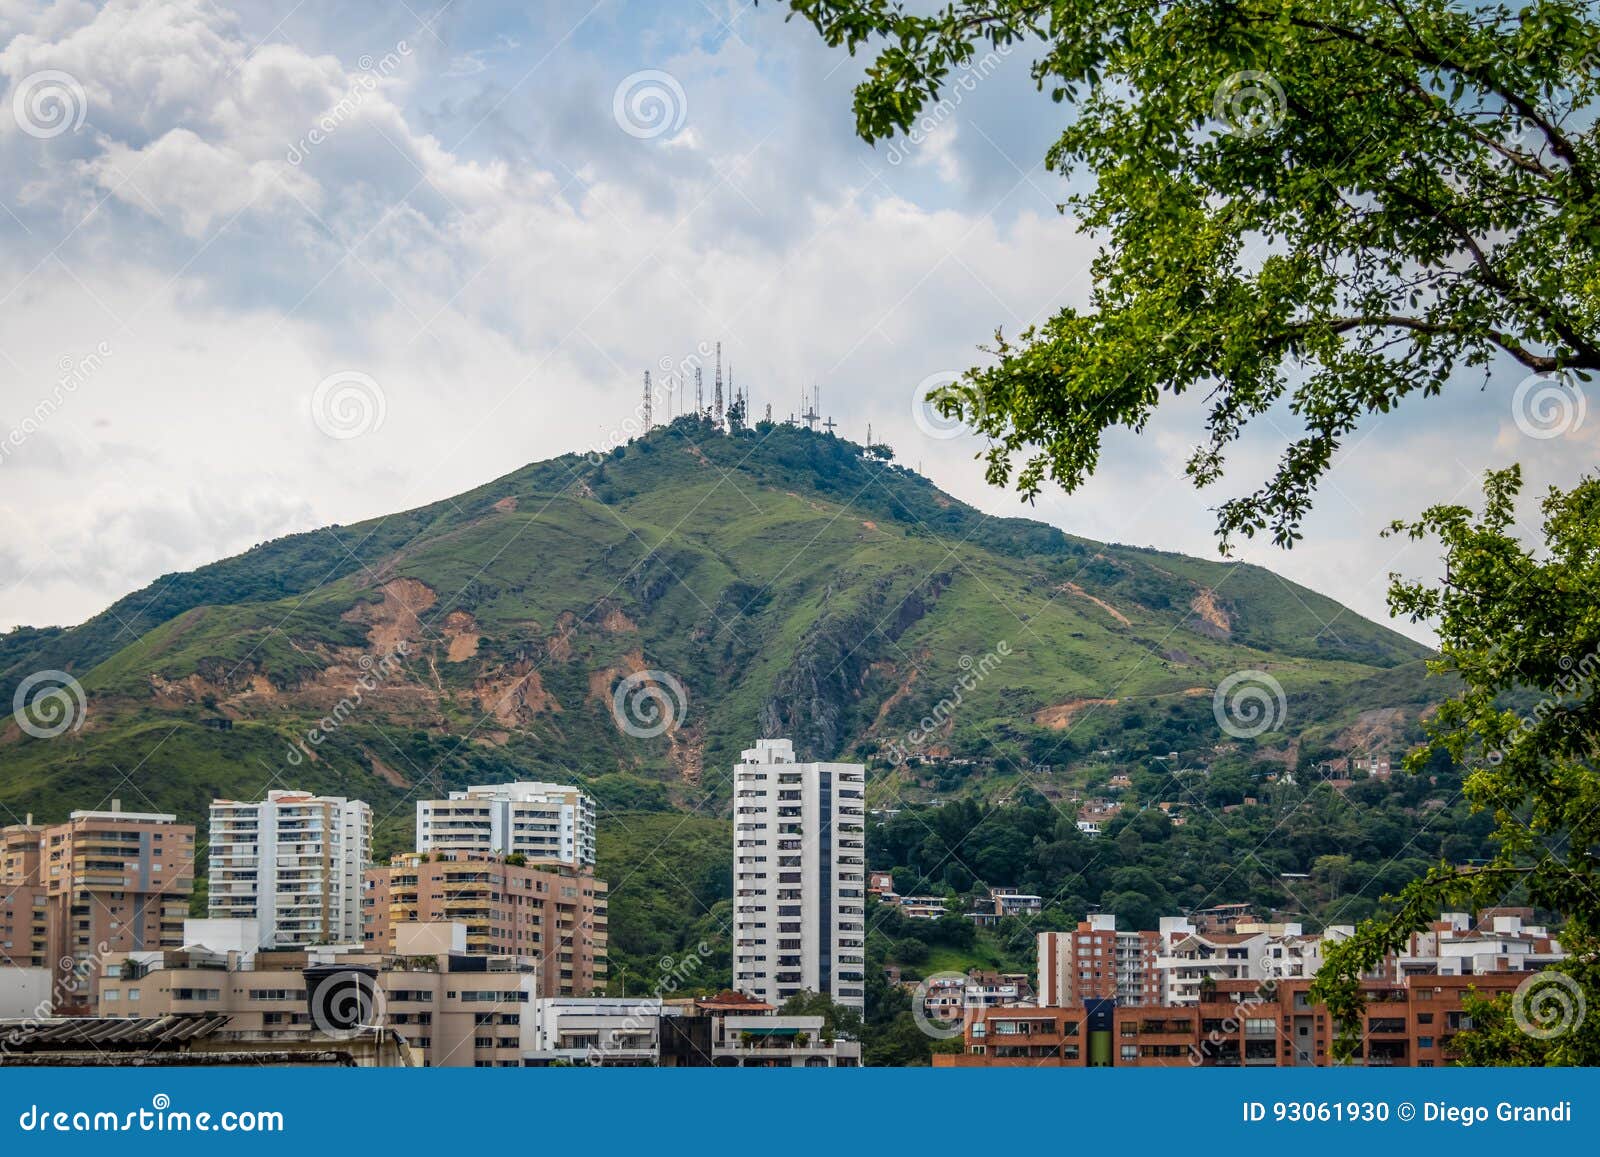 hill of three crosses cerro de las tres cruces and cali city view - cali, colombia